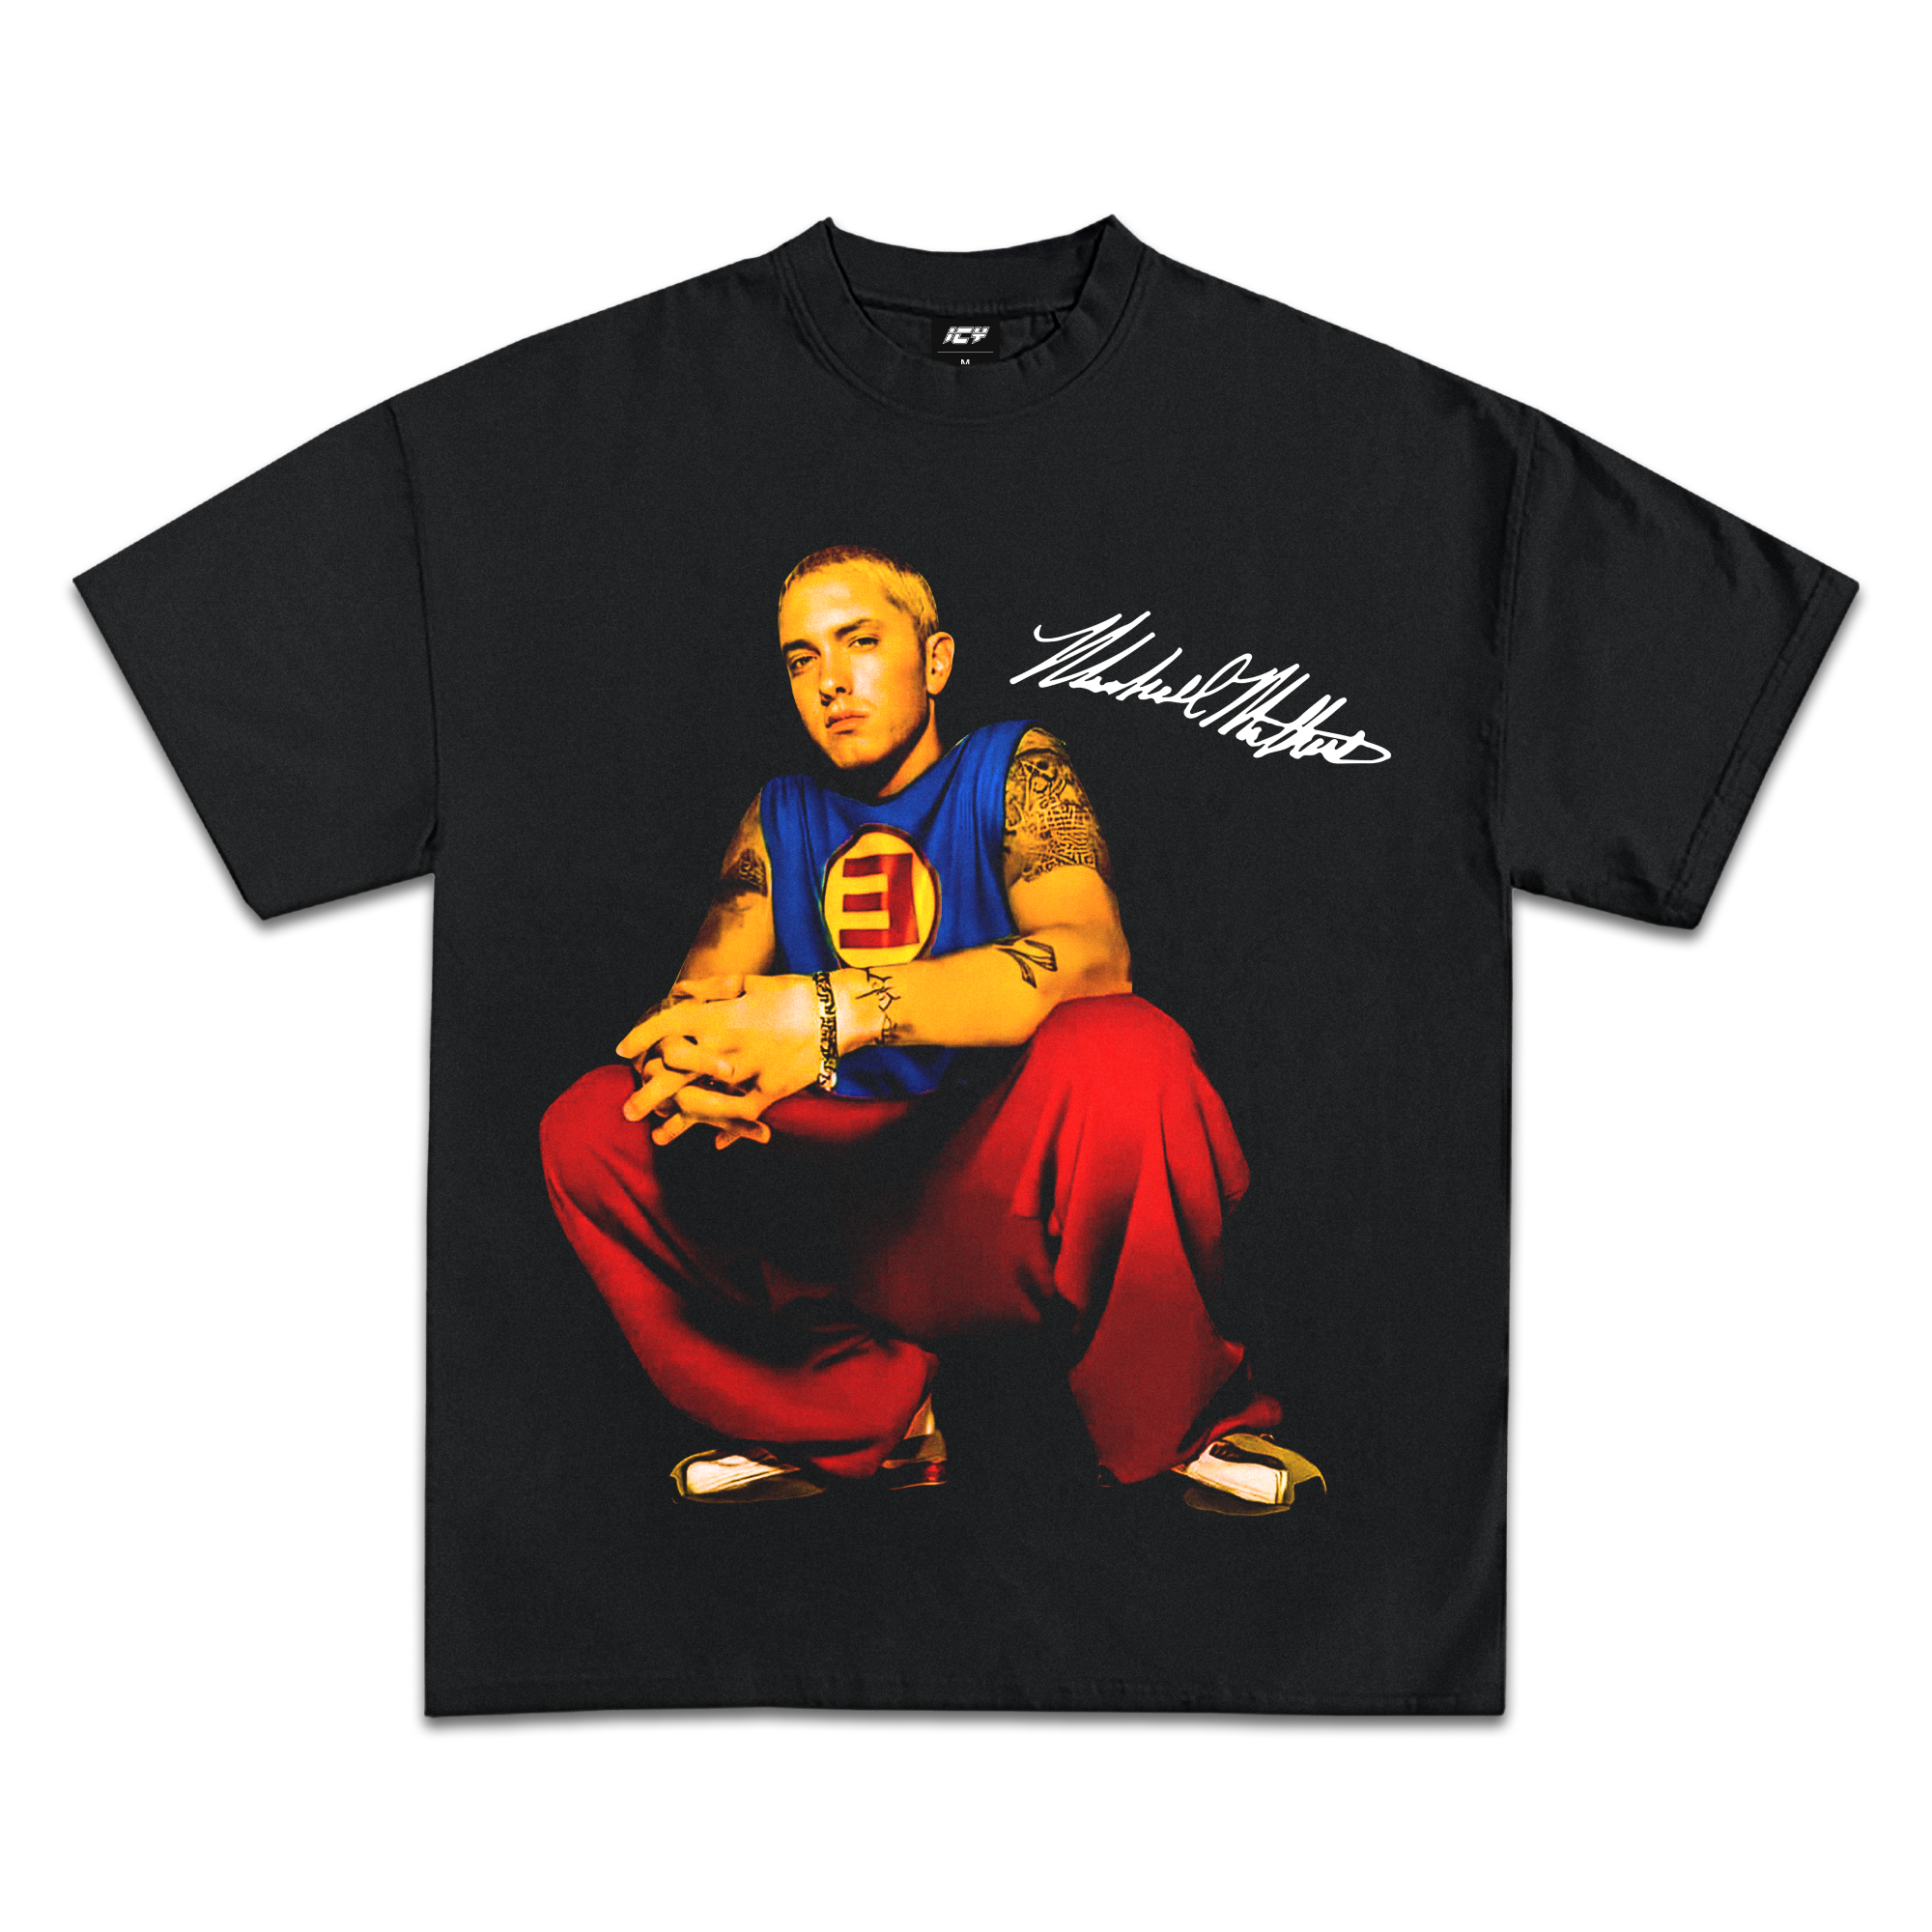 The Eminem Show Graphic T-Shirt